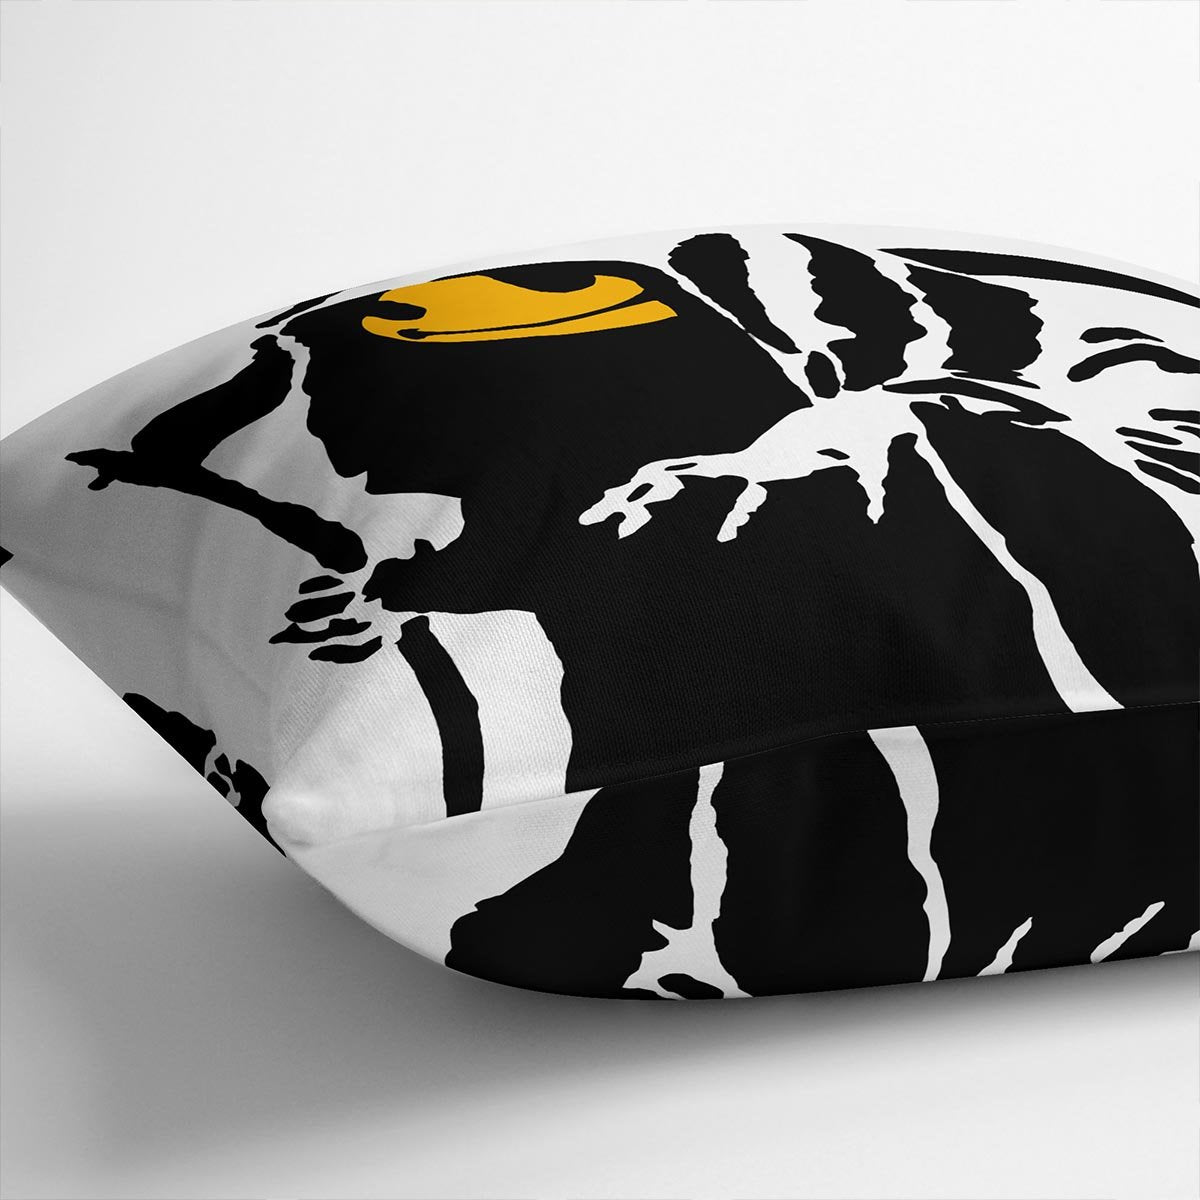 Banksy Grim Reaper Cushion